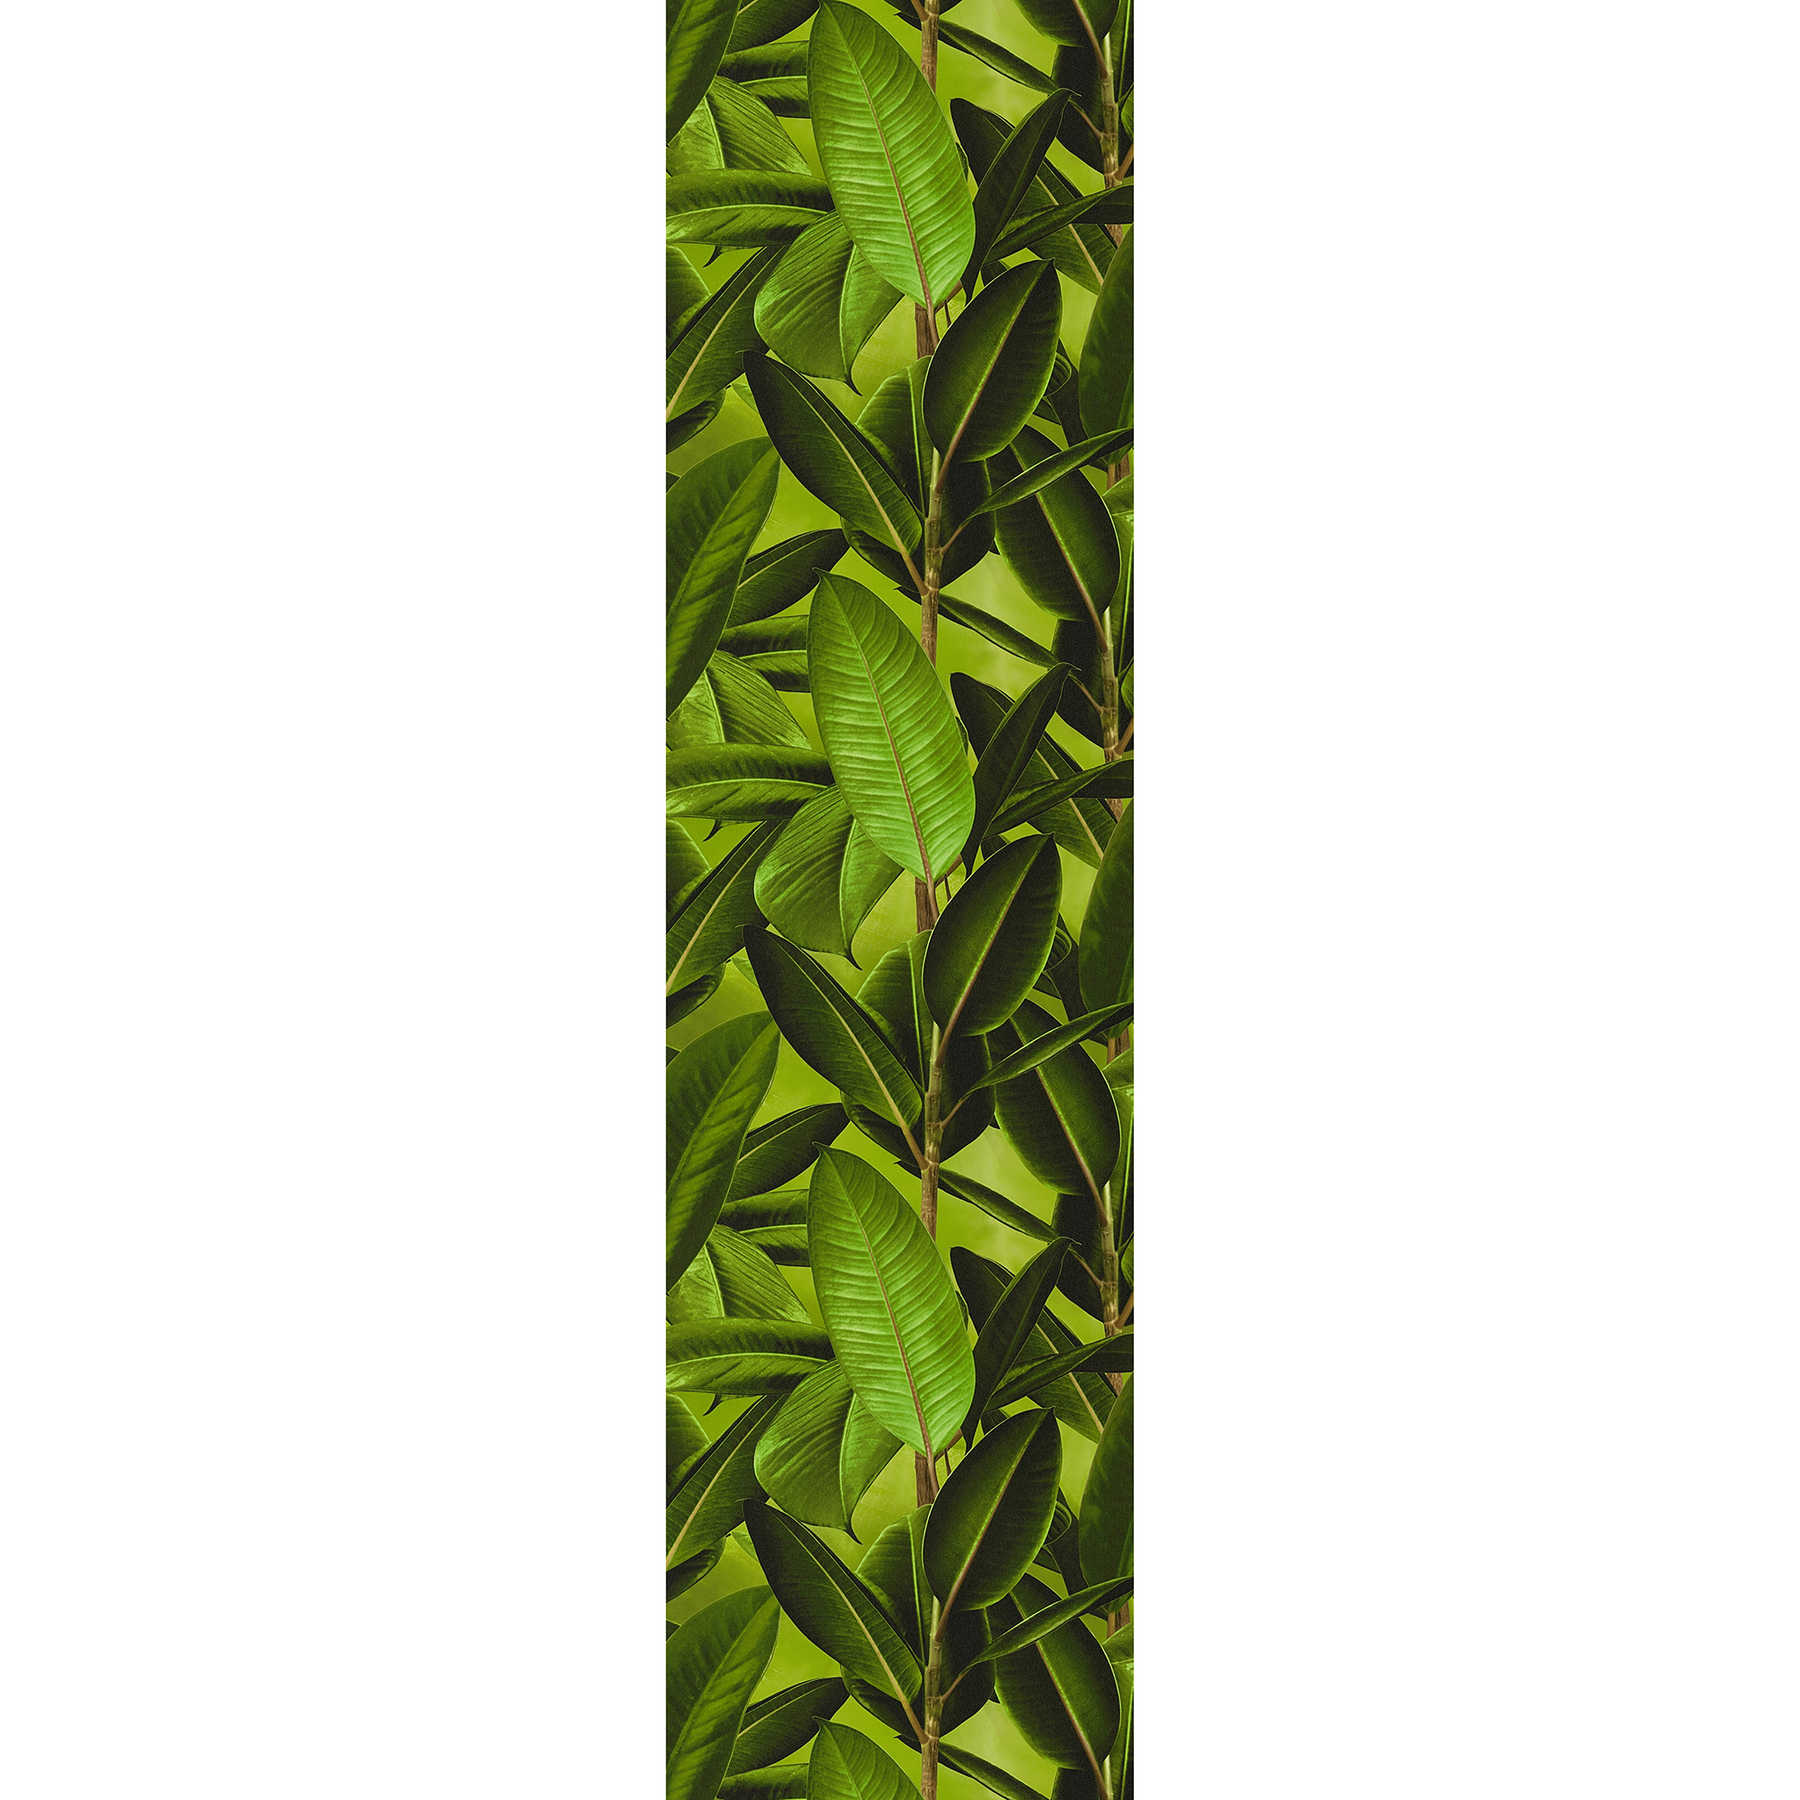         3D Tapetenpanel Blätter Design selbstklebend – Grün
    